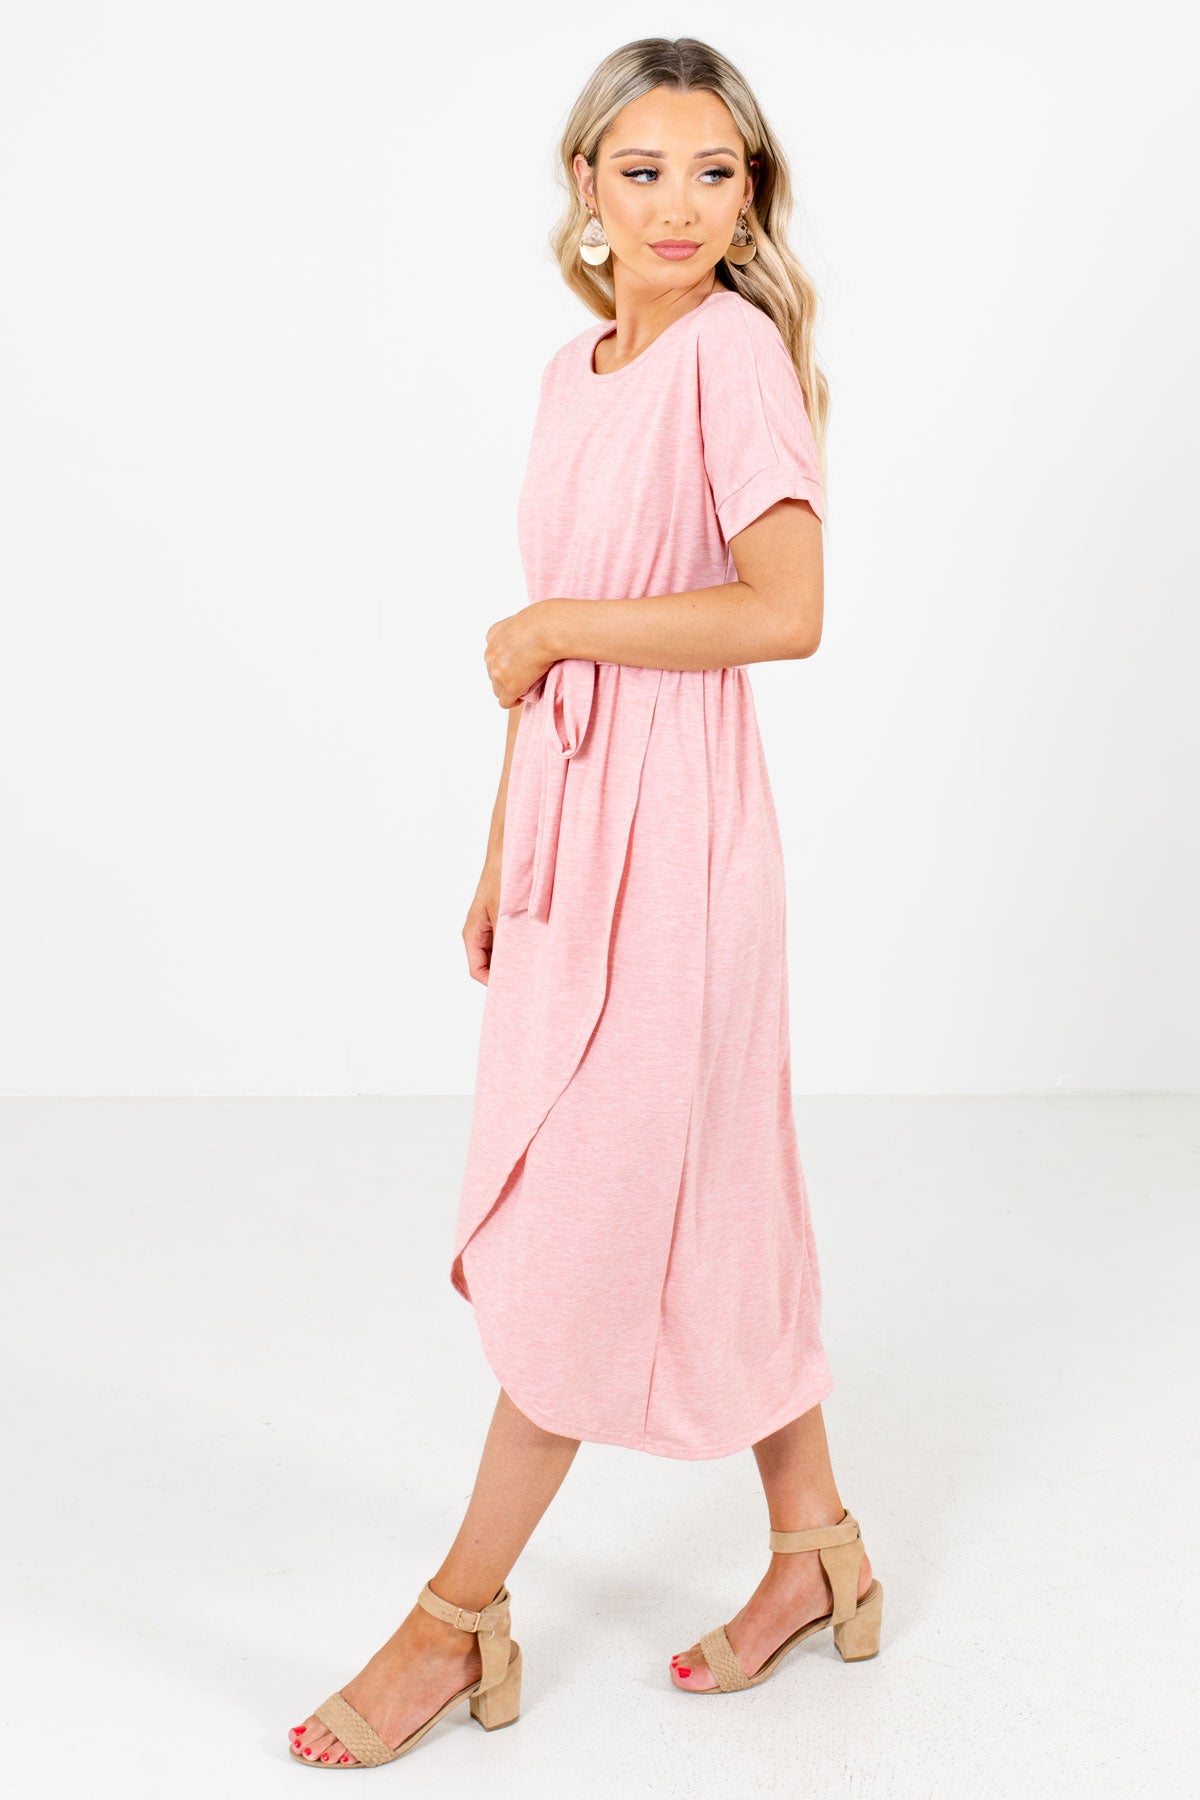 Pink Waist Tie Detail Boutique Knee-Length Dresses for Women